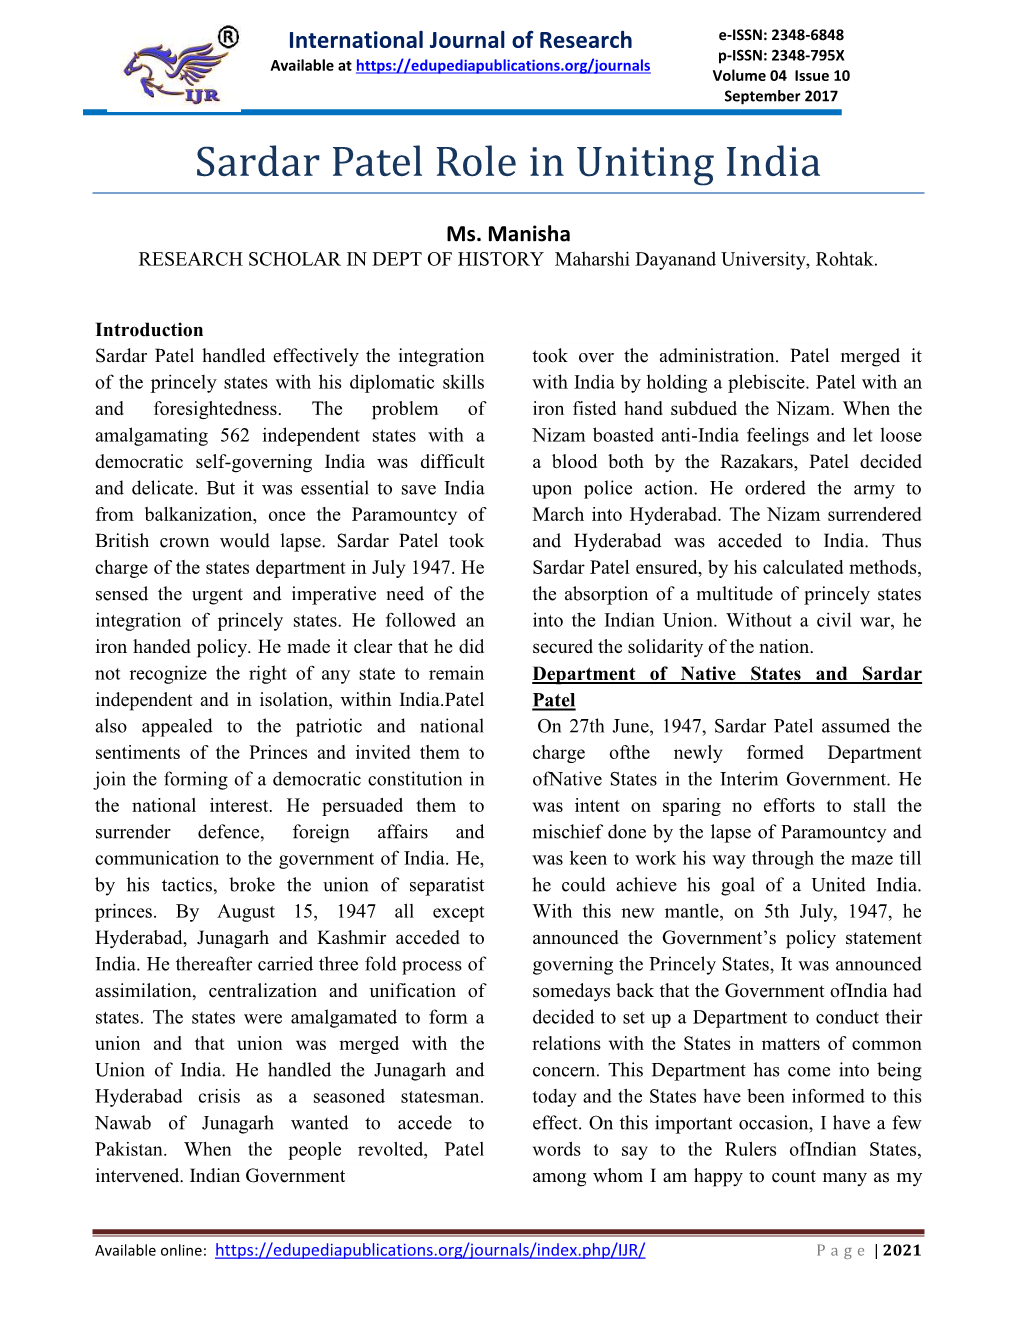 Sardar Patel Role in Uniting India